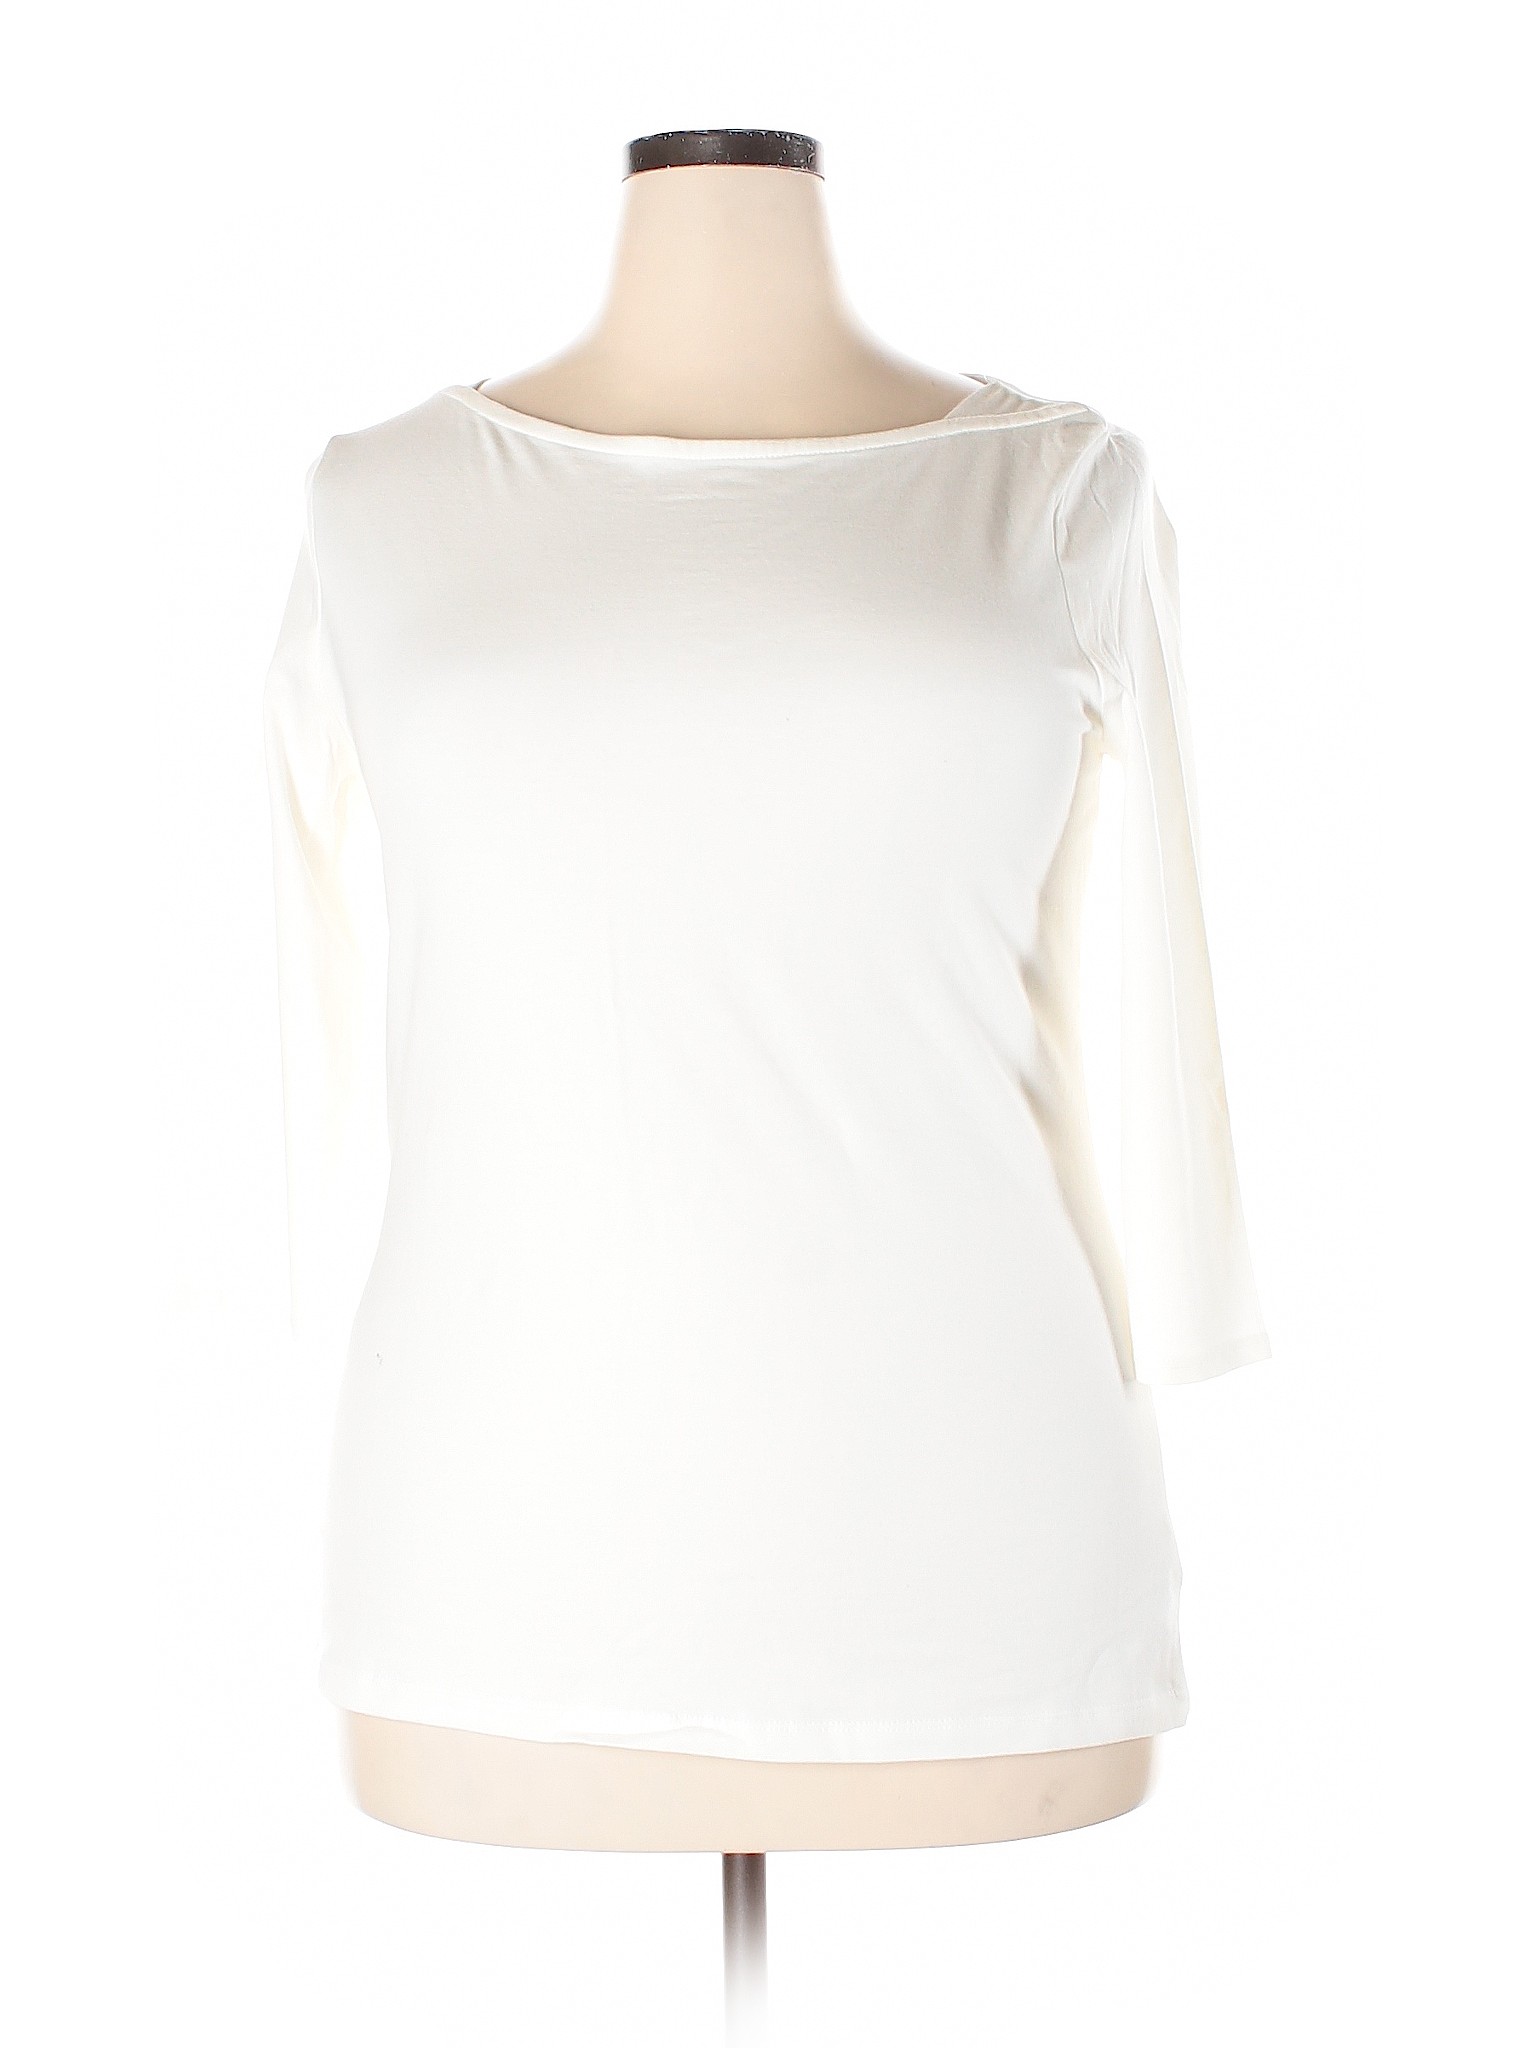 NWT Merona Women White 3/4 Sleeve T-Shirt XXL | eBay